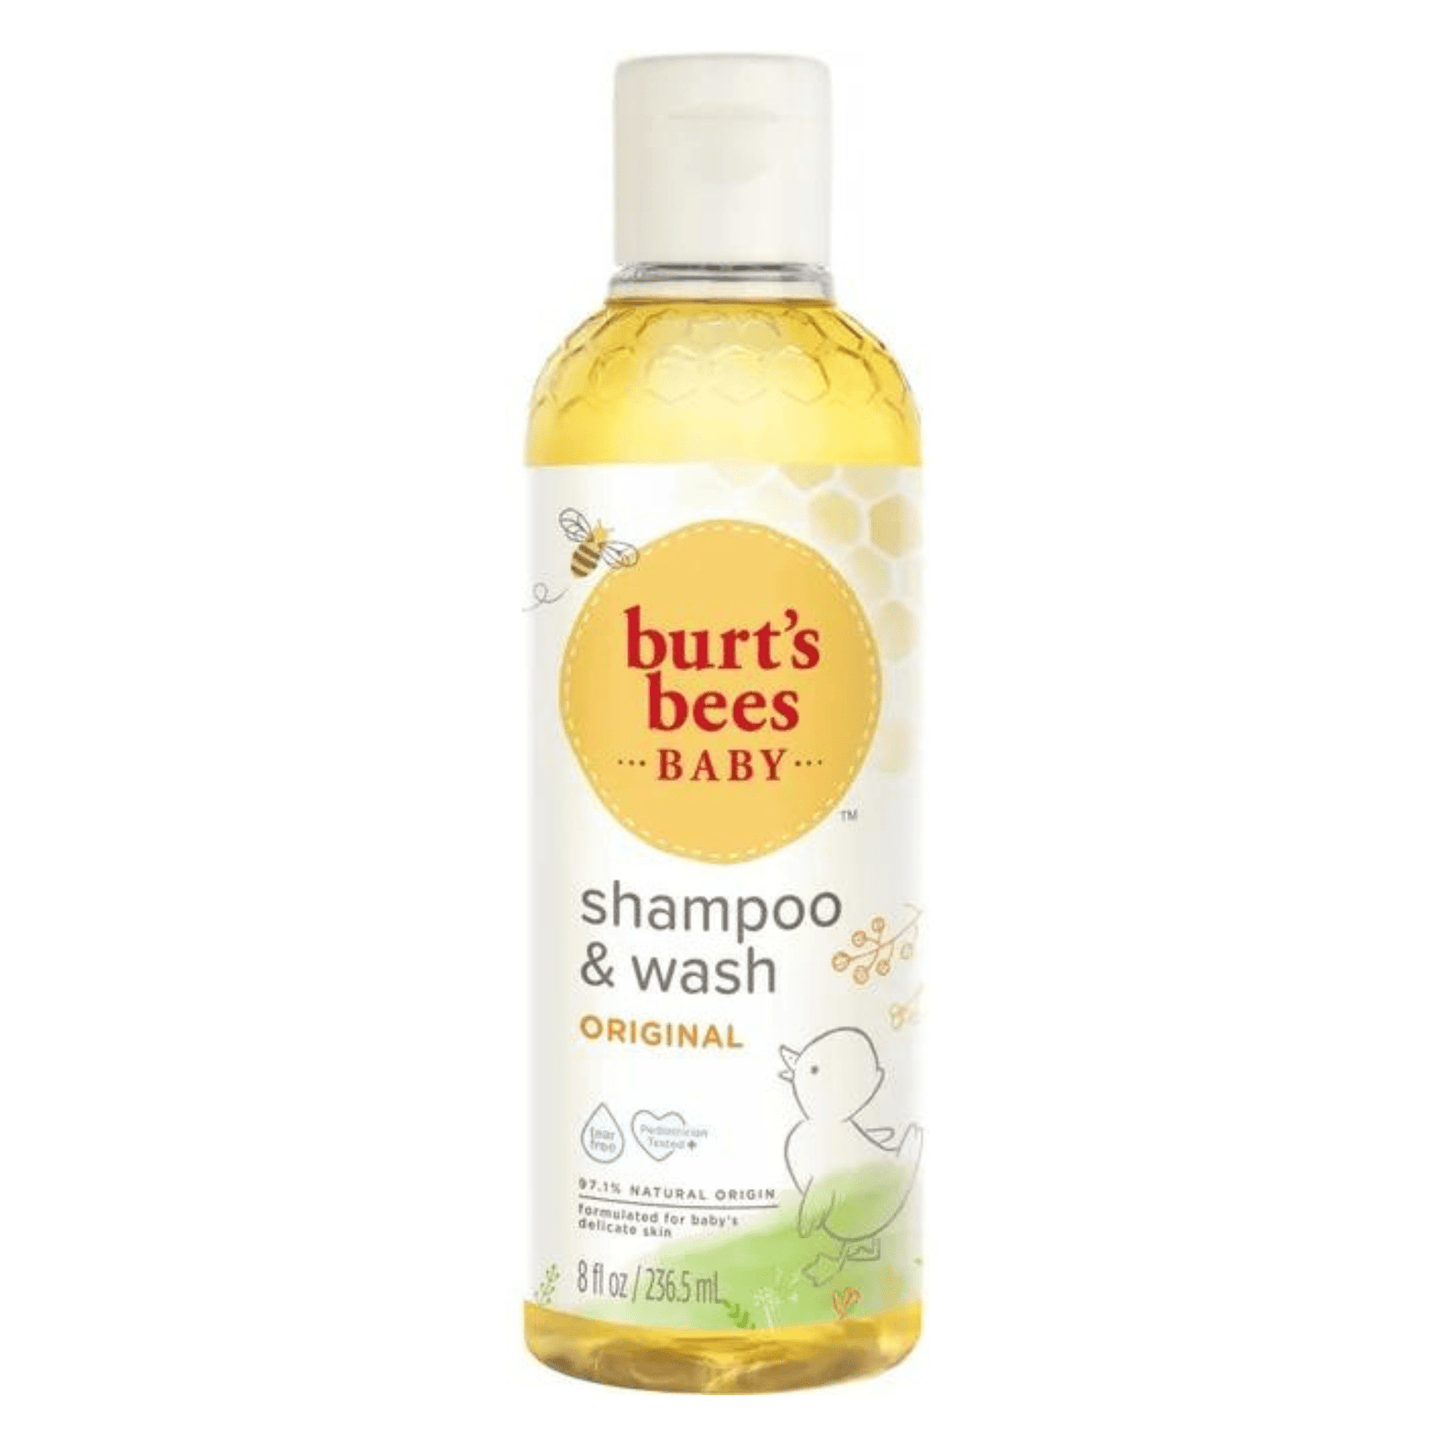 Primary Image of Baby Bee Shampoo & Wash